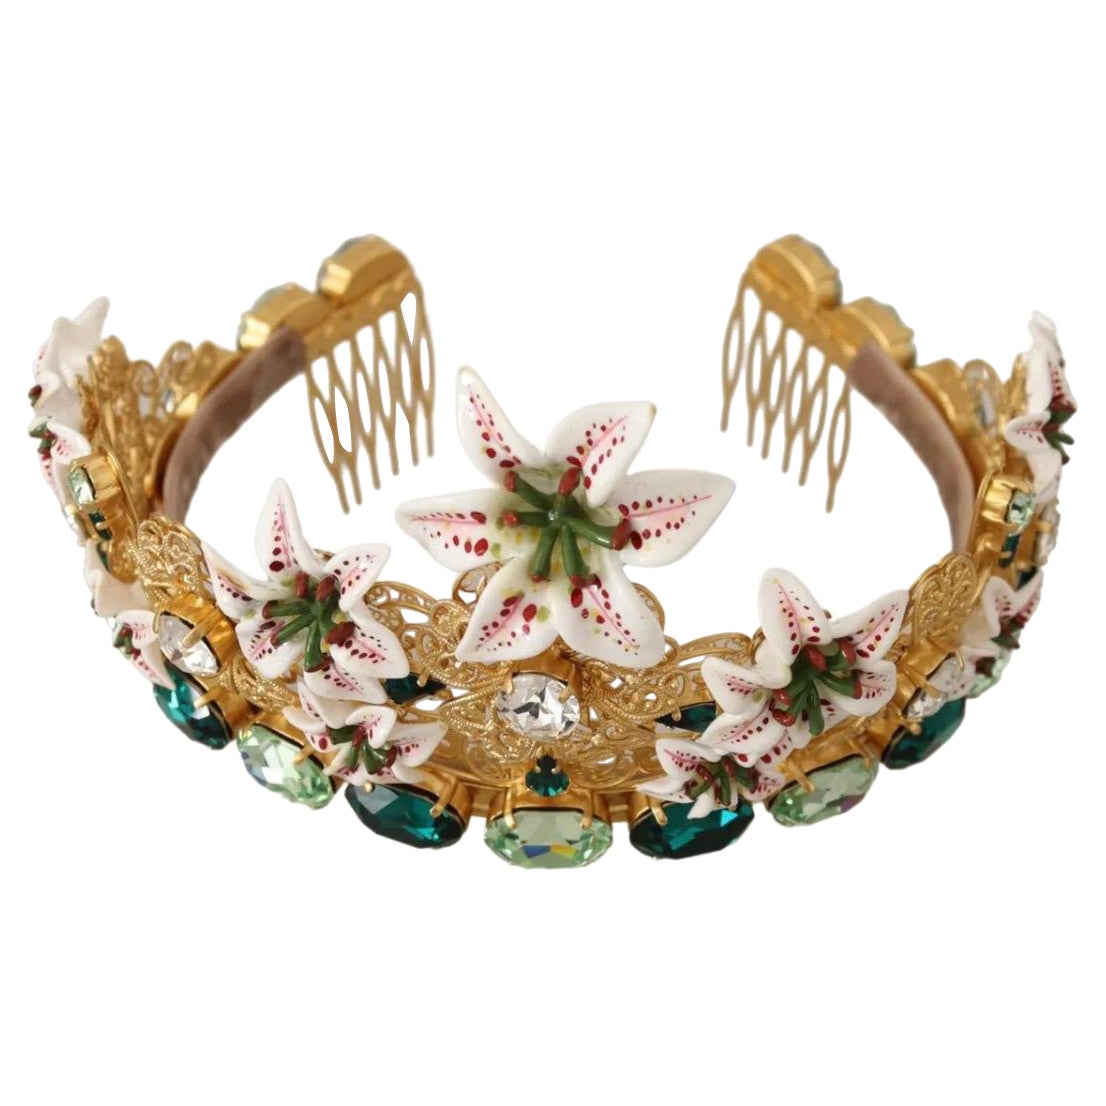 Dolce & Gabbana golden tiara with an openwork pattern